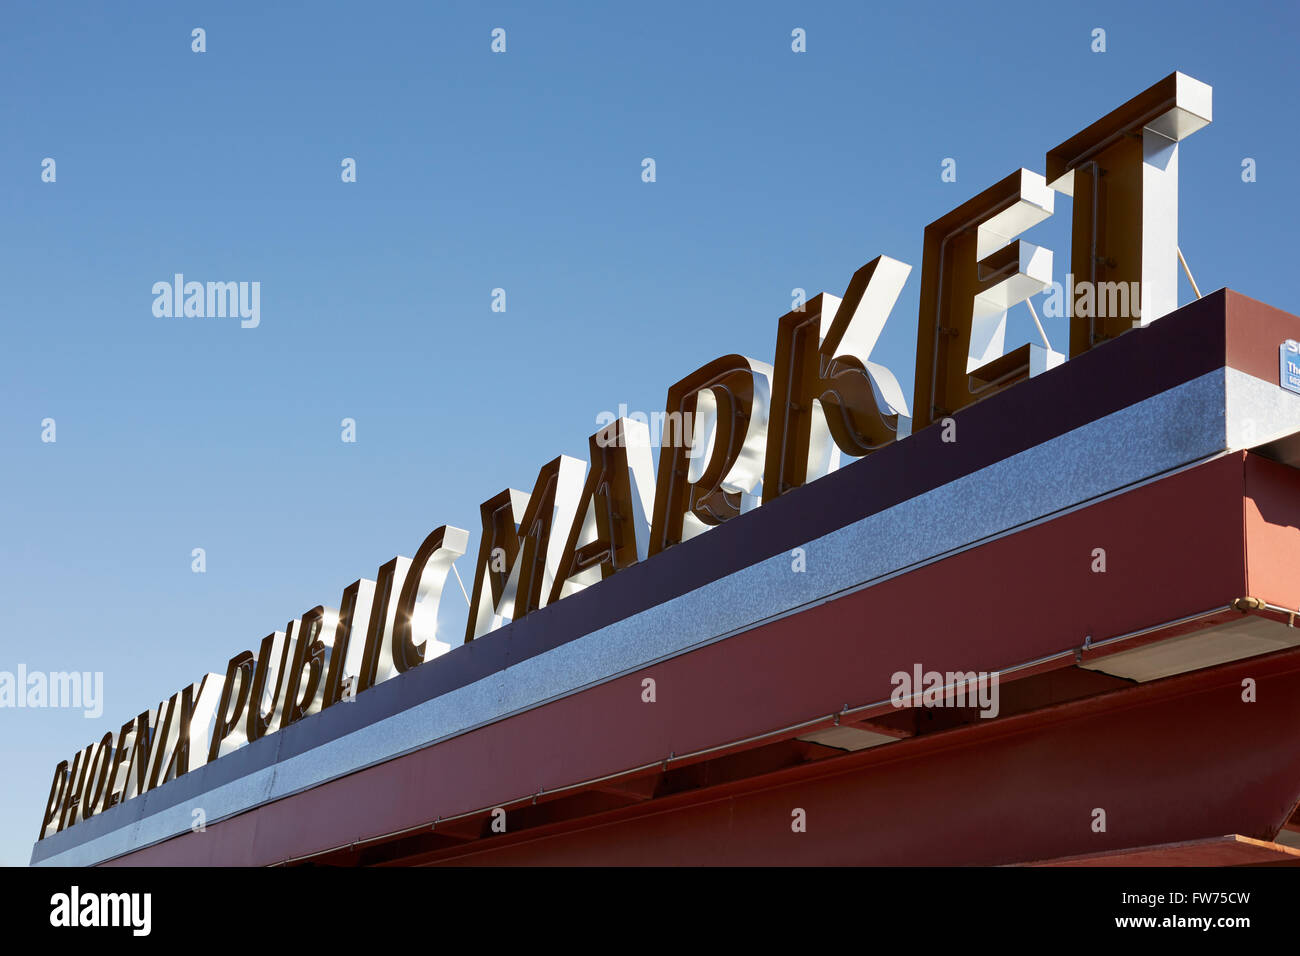 Phoenix Public Market sign in the retro art-deco style, Arizona, USA Stock Photo